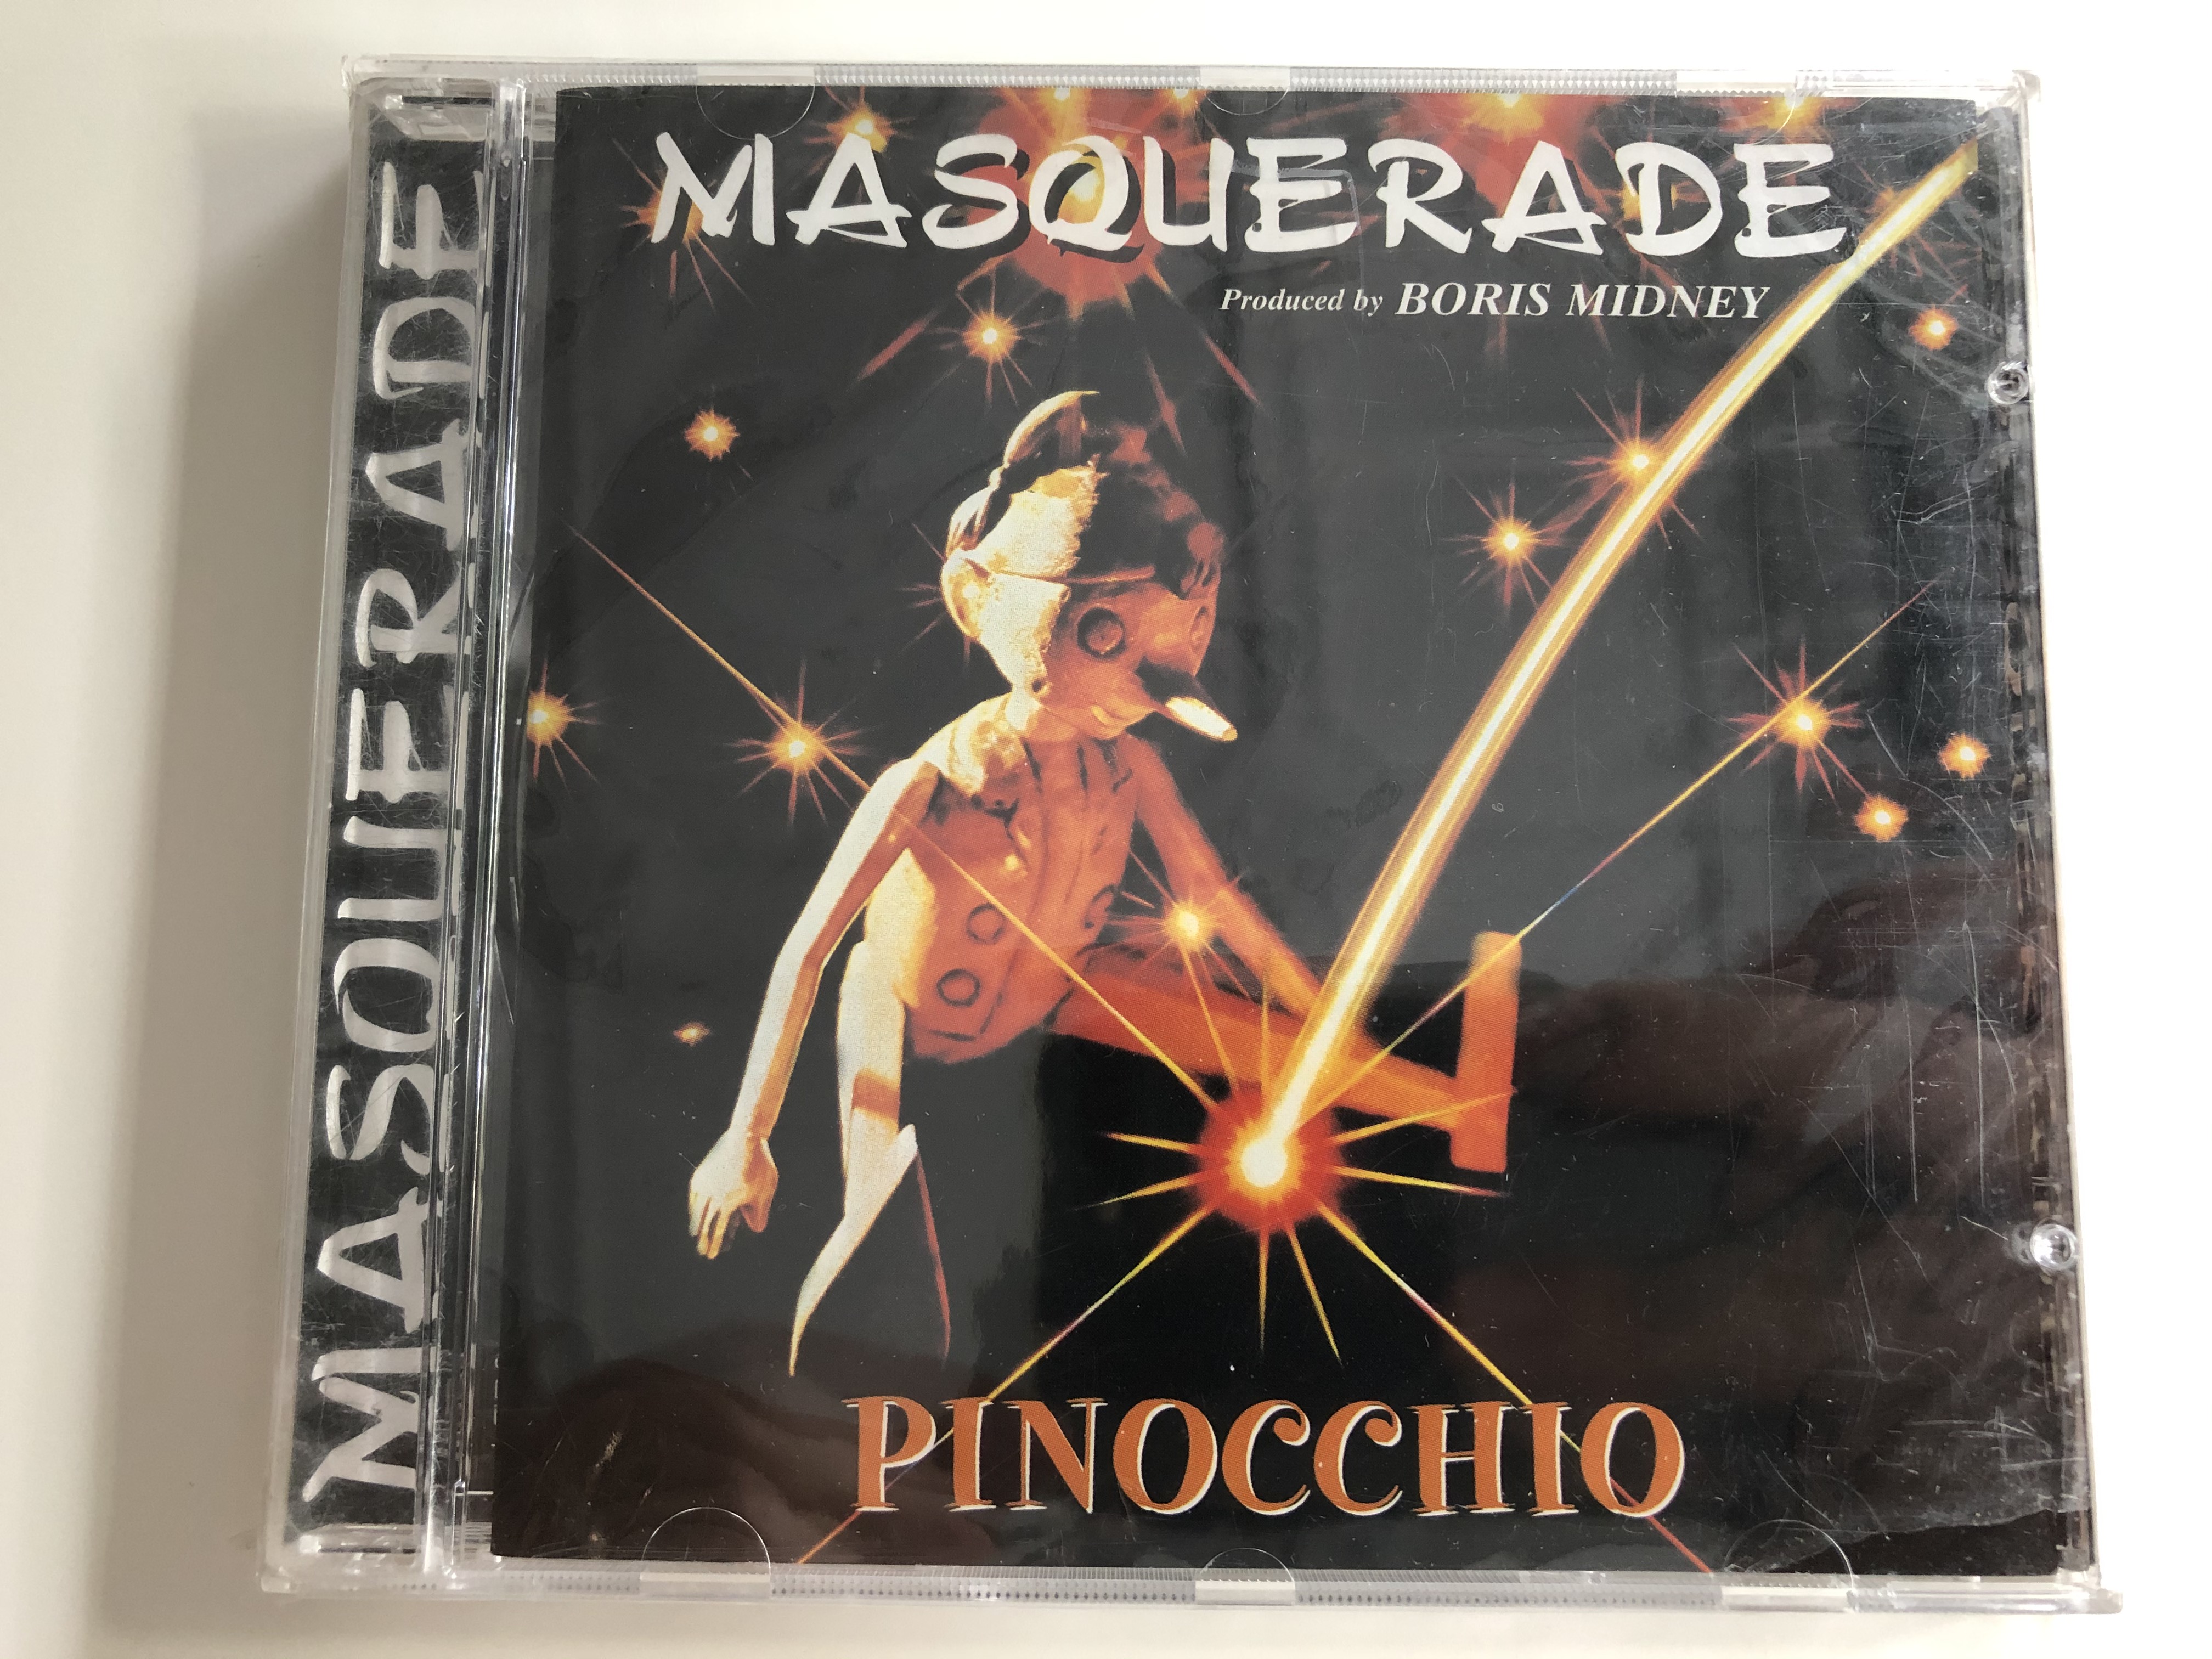 masquerade-pinocchio-produced-by-boris-midney-unidisc-audio-cd-splk-7147-1-.jpg